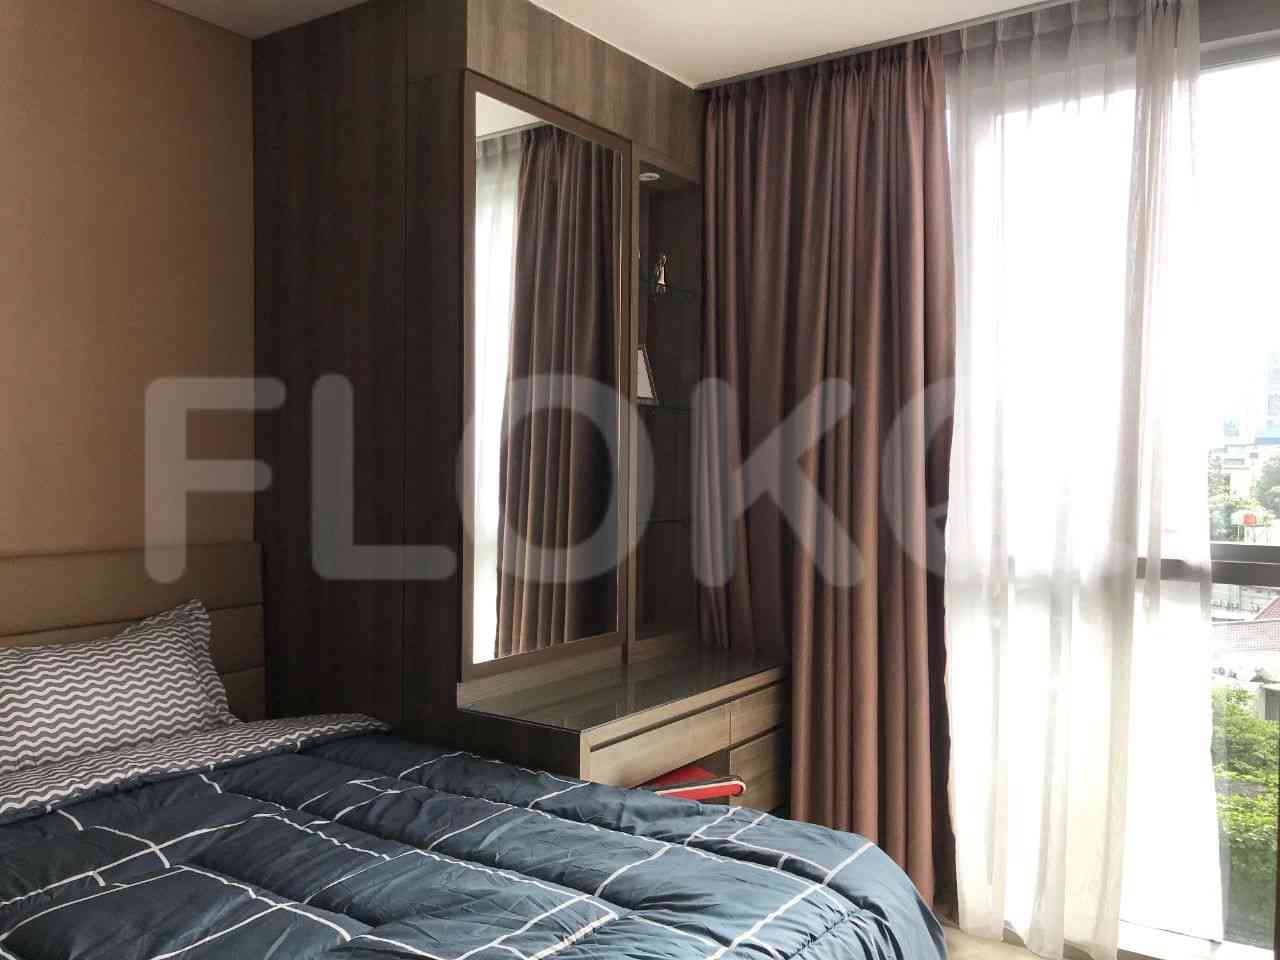 1 Bedroom on 2nd Floor for Rent in Ciputra World 2 Apartment - fku909 2